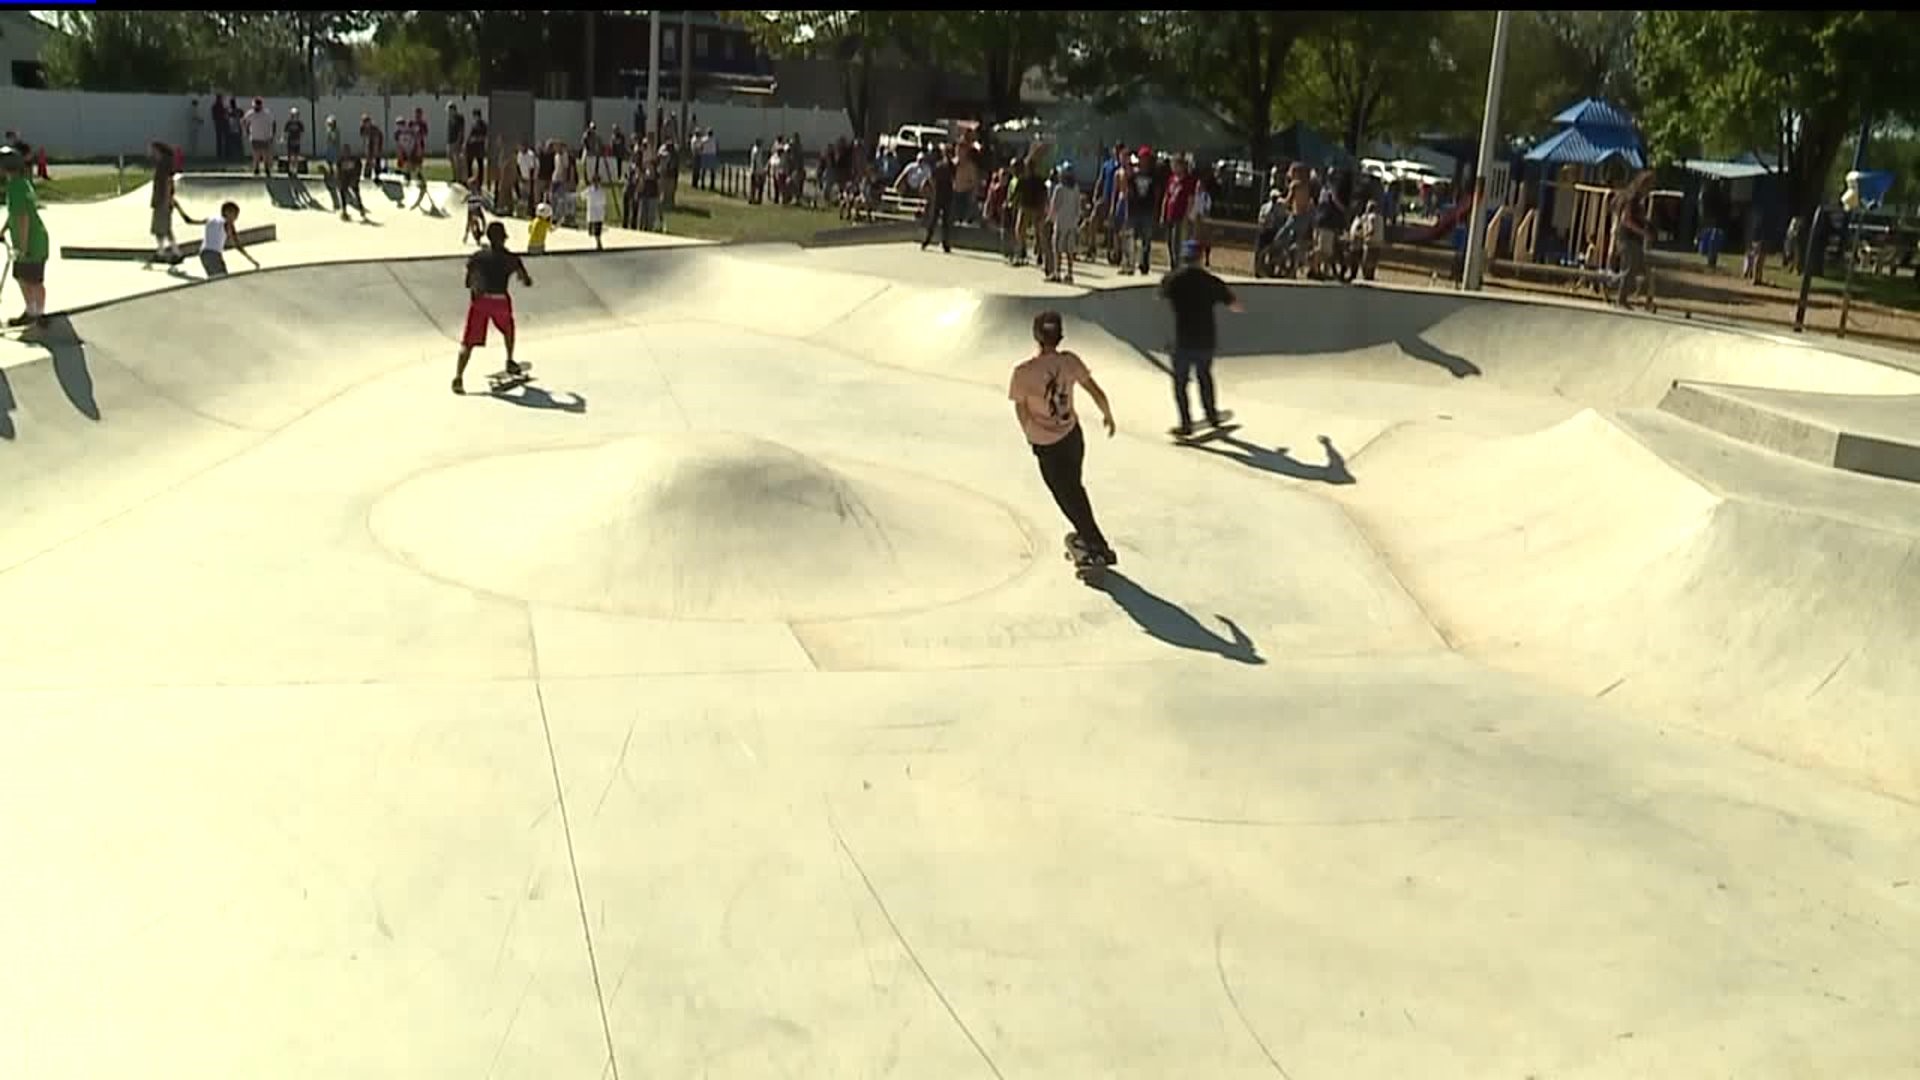 Dozens share concrete, carve bowls, and grind rails at new Steelton Skate Park